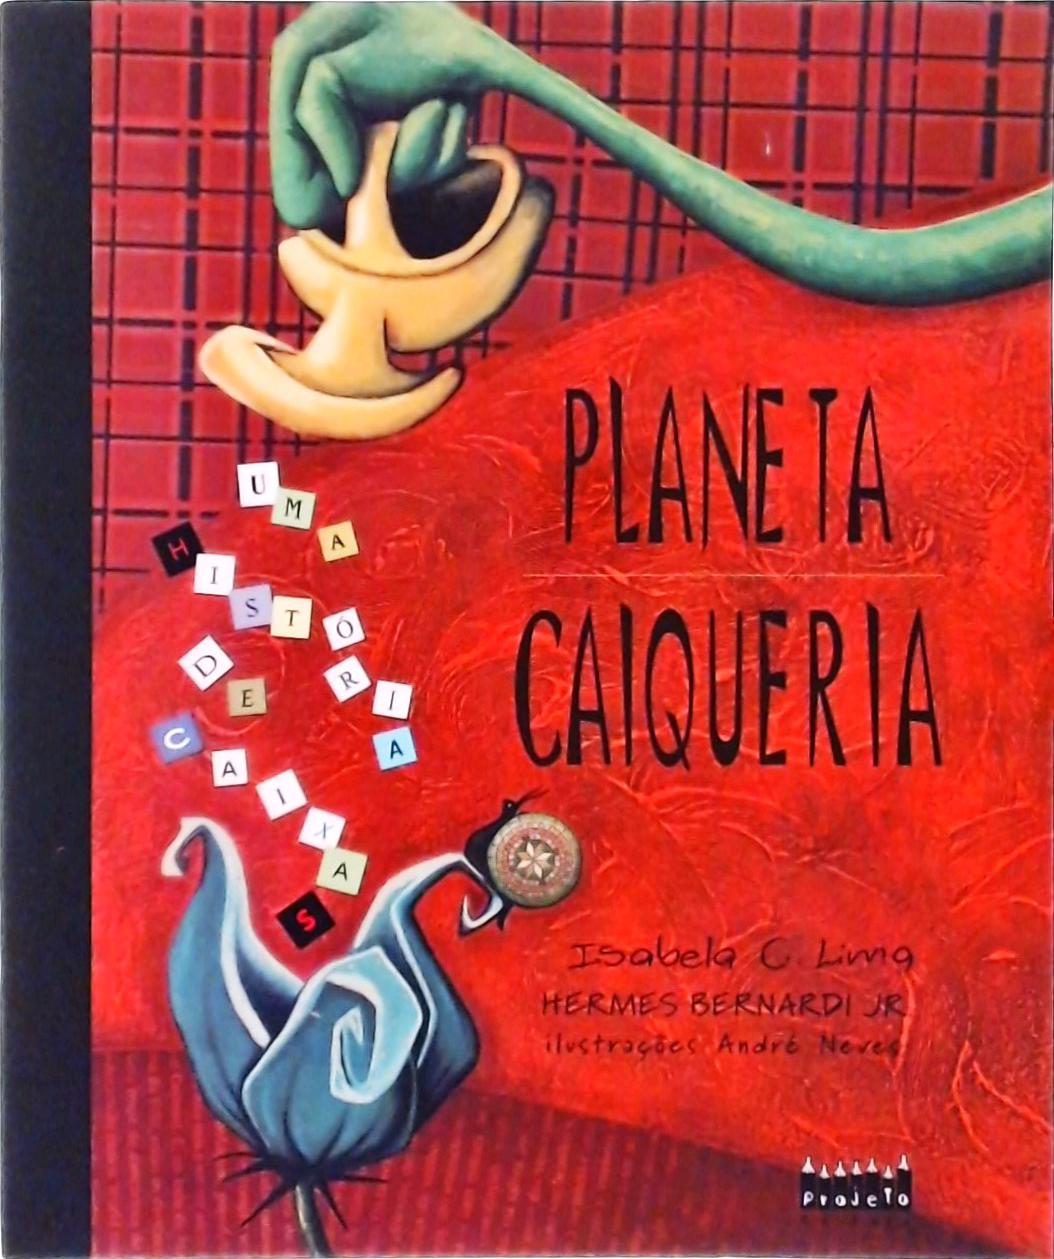 Planeta Caiqueria